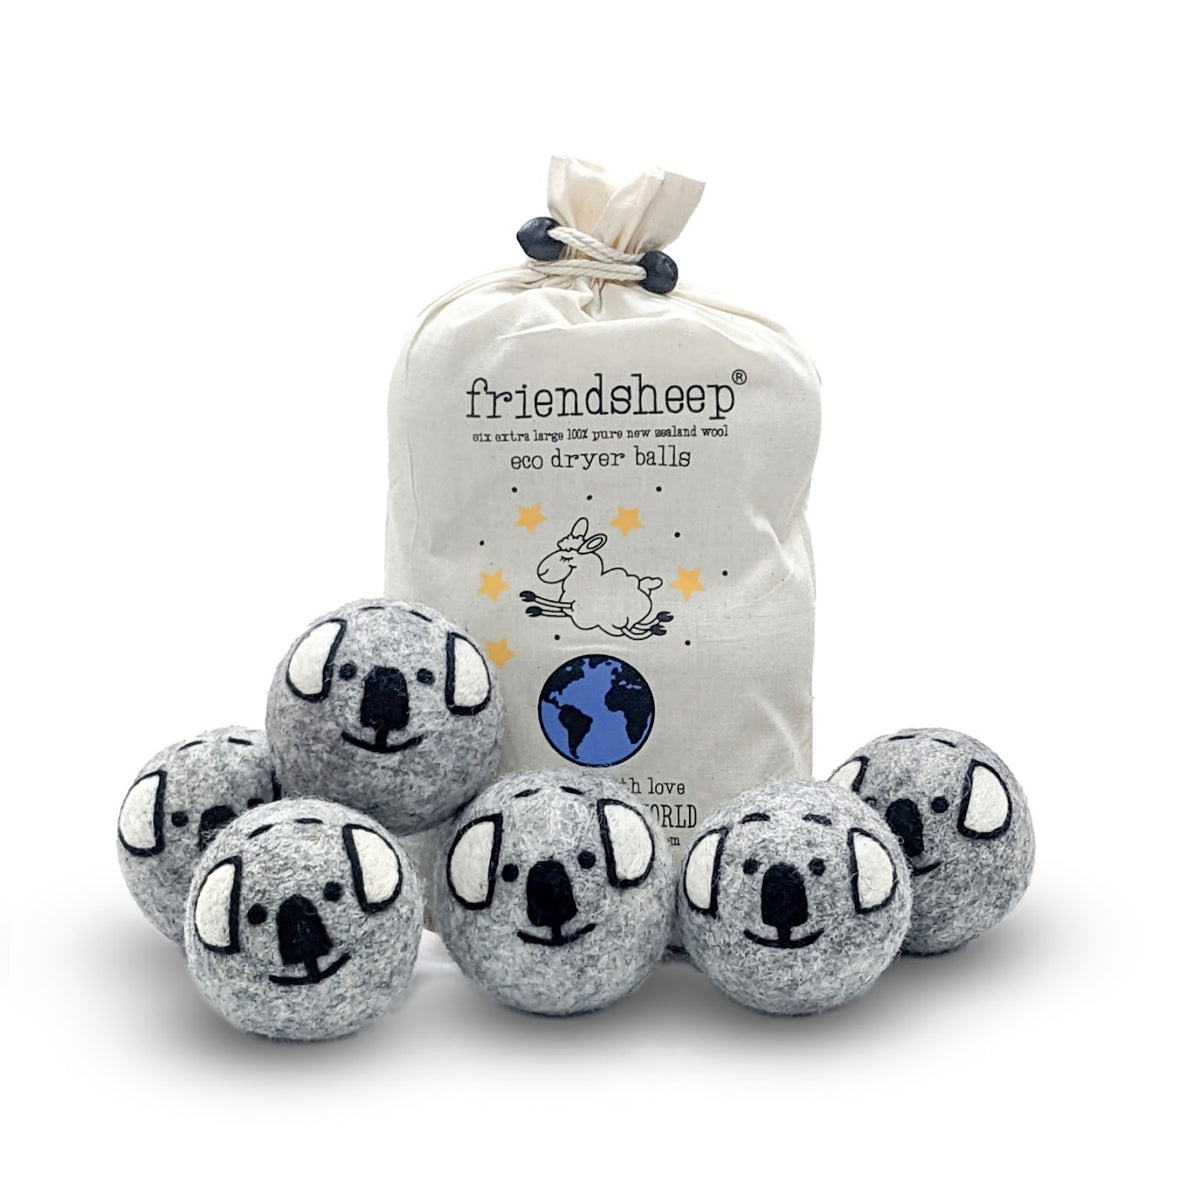 Friendsheep - Eco Dryer Ball Koala (Set of 6)